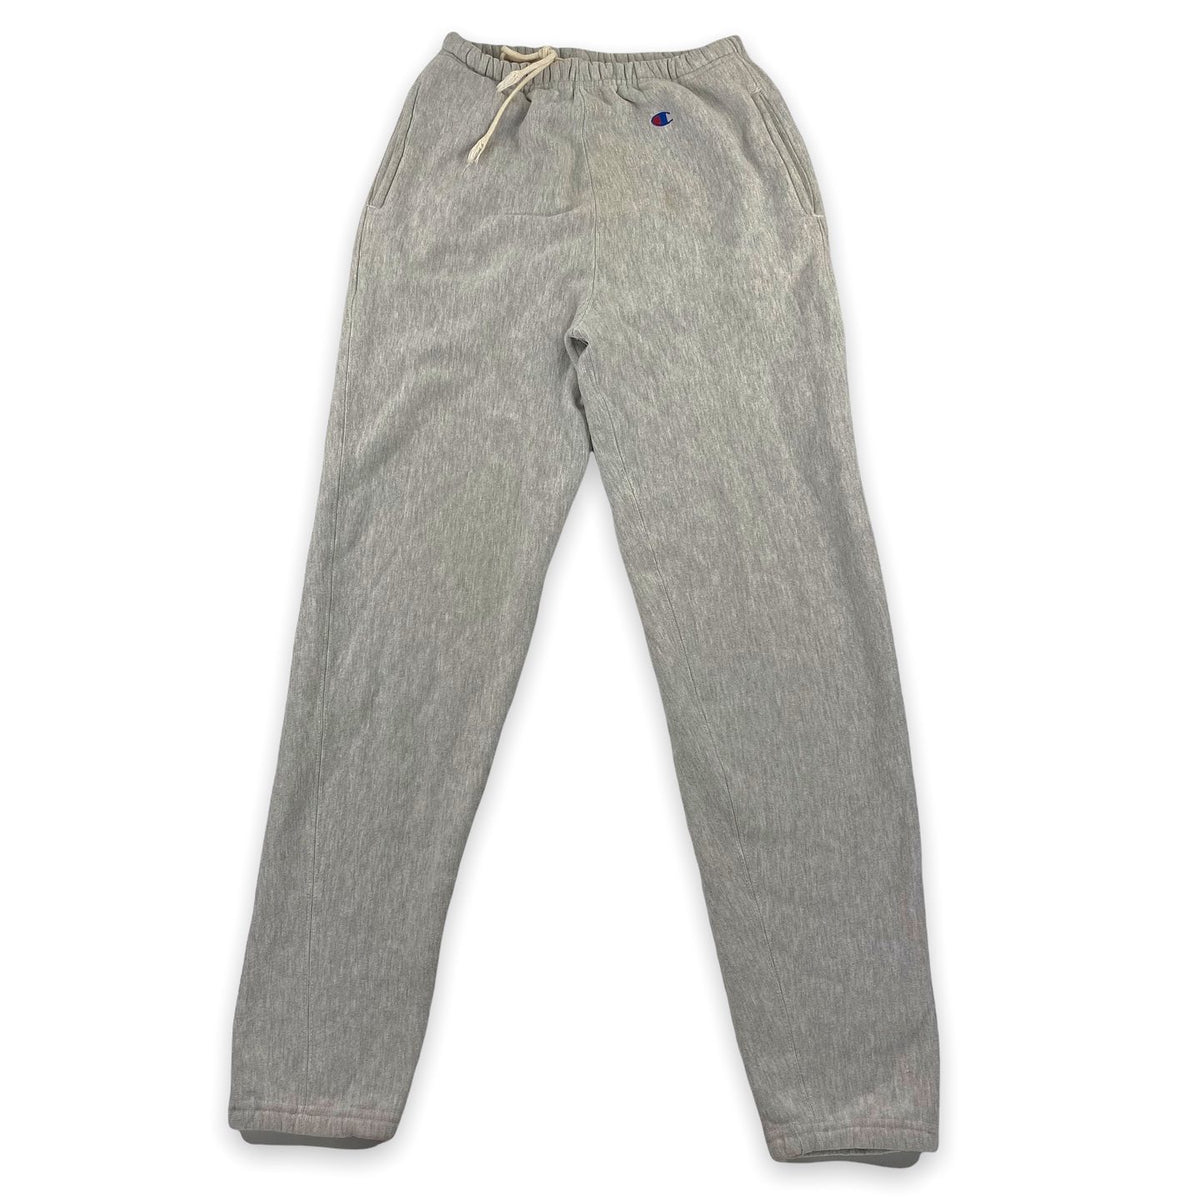 Custom Champion - Reverse Weave Sweatpants with Pockets - DTLA Print